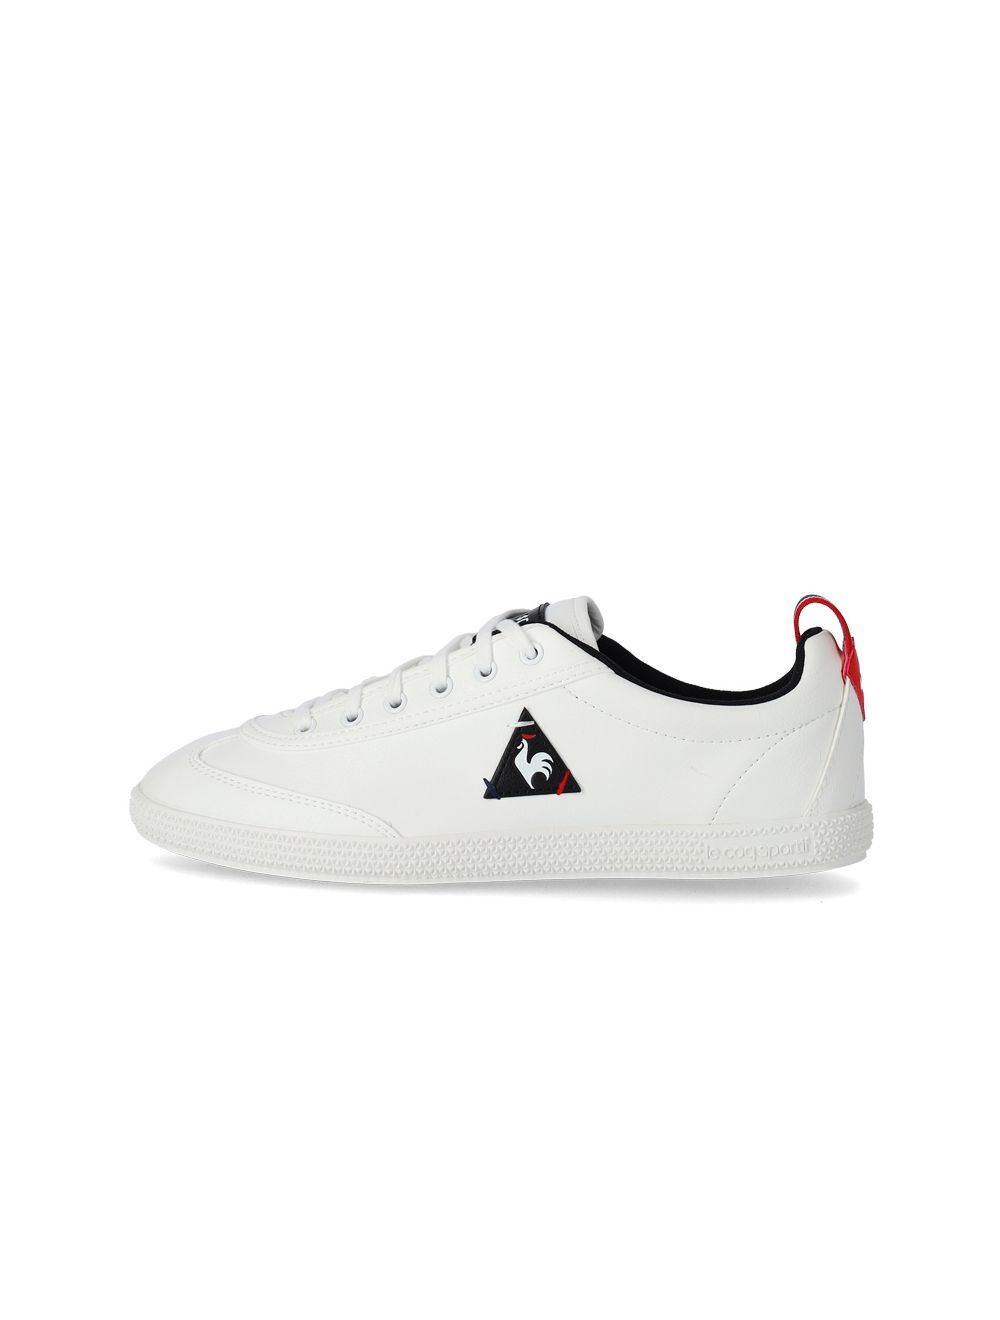 Shop Le Coq Sportif Provencale 2 Low Mens Sneaker White Black | S